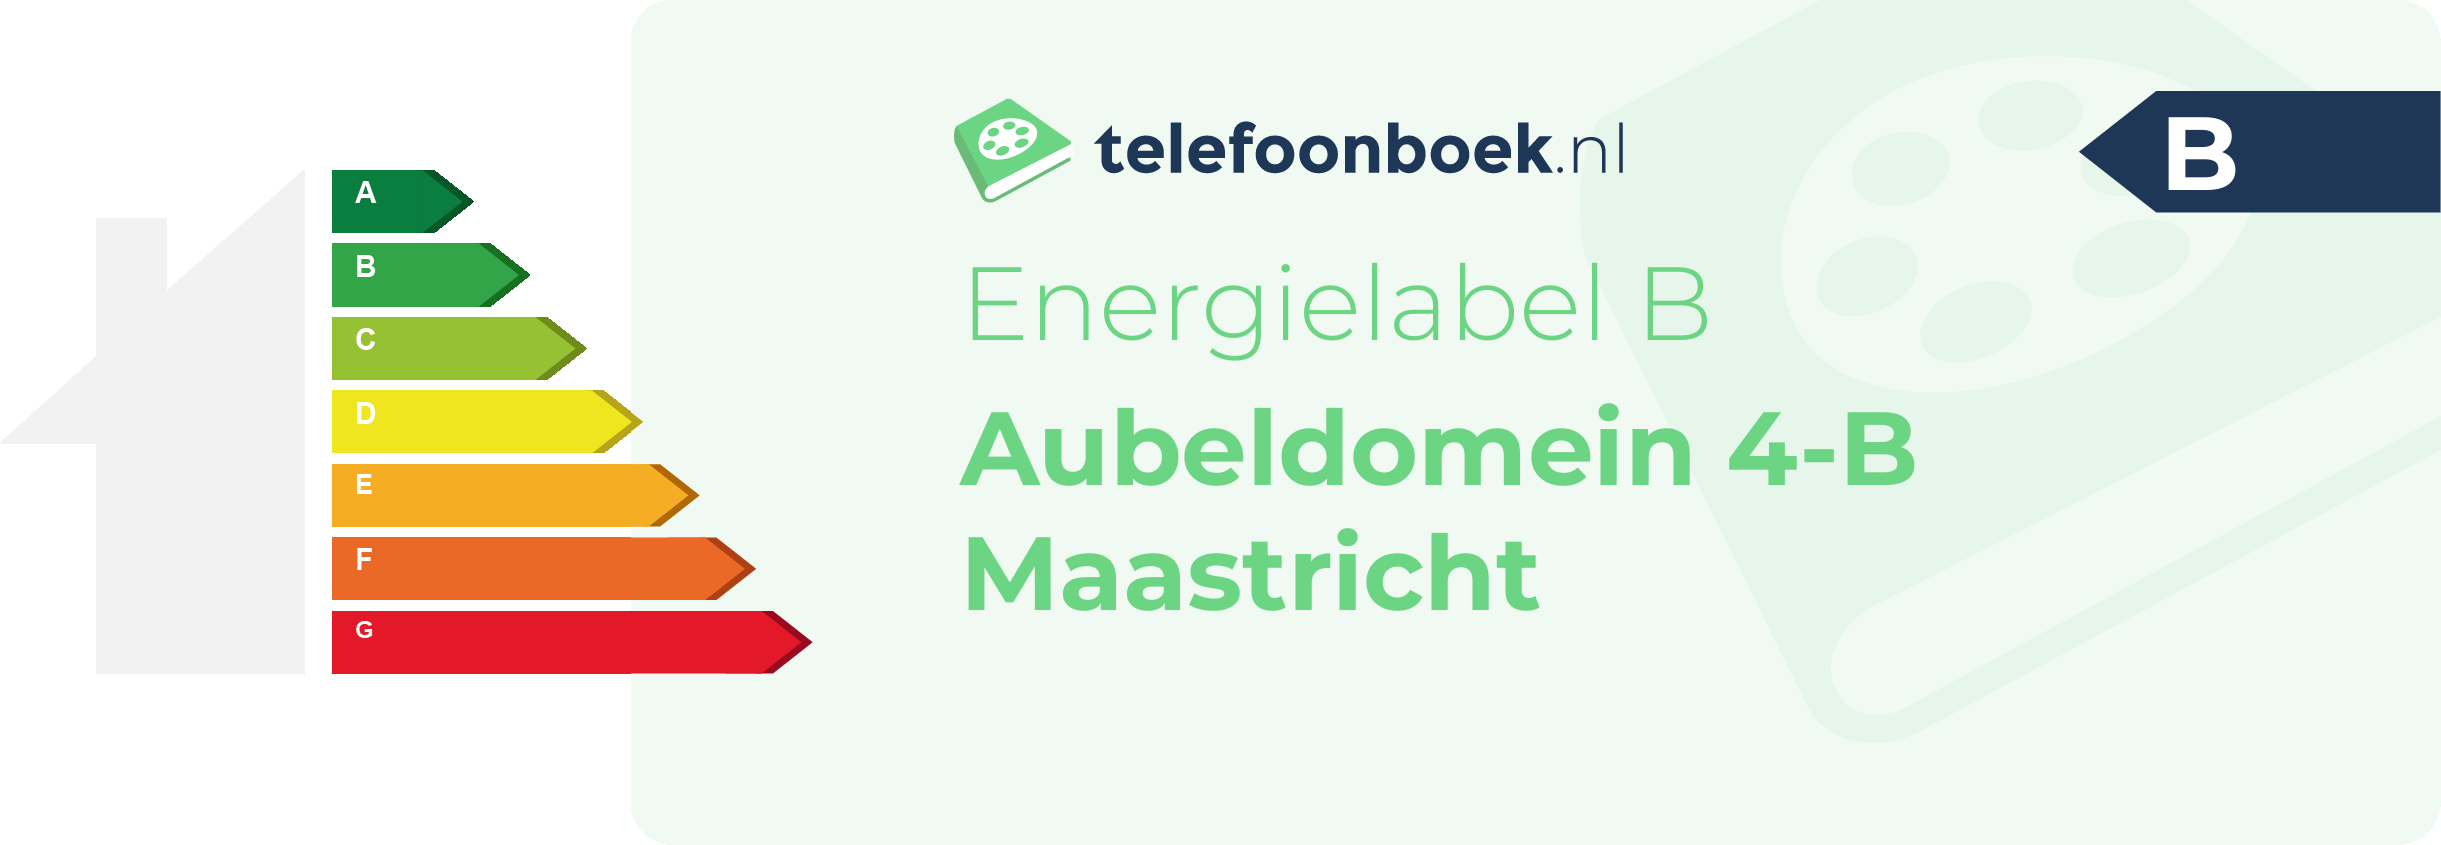 Energielabel Aubeldomein 4-B Maastricht